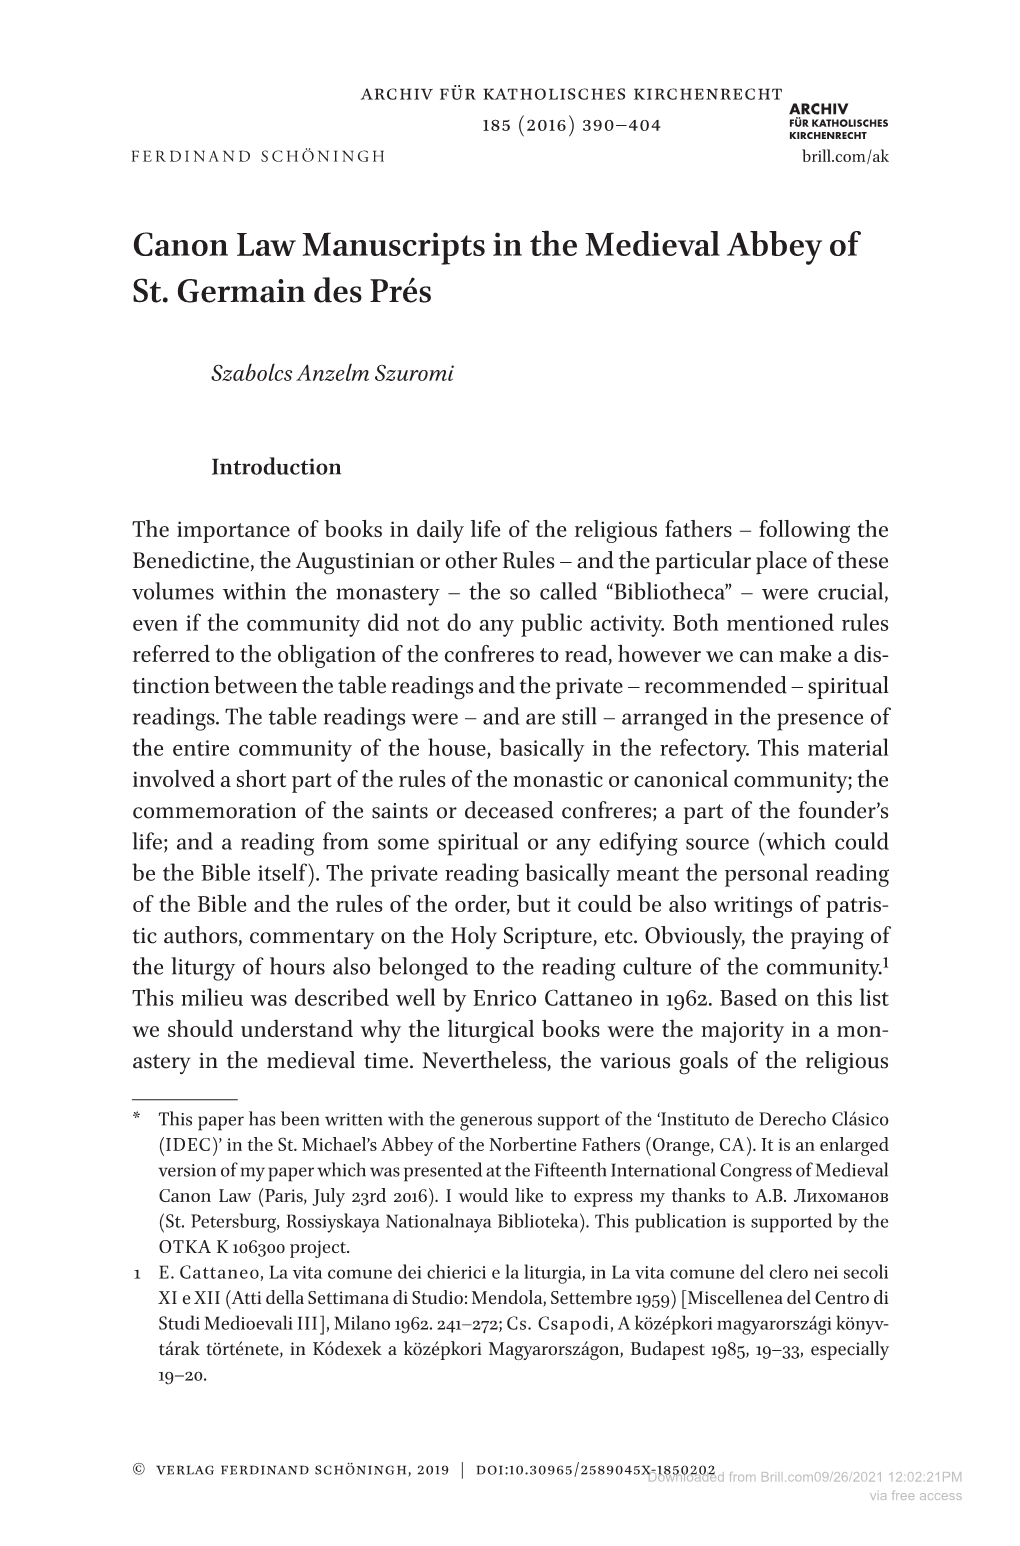 Canon Law Manuscripts in the Medieval Abbey of St. Germain Des Prés